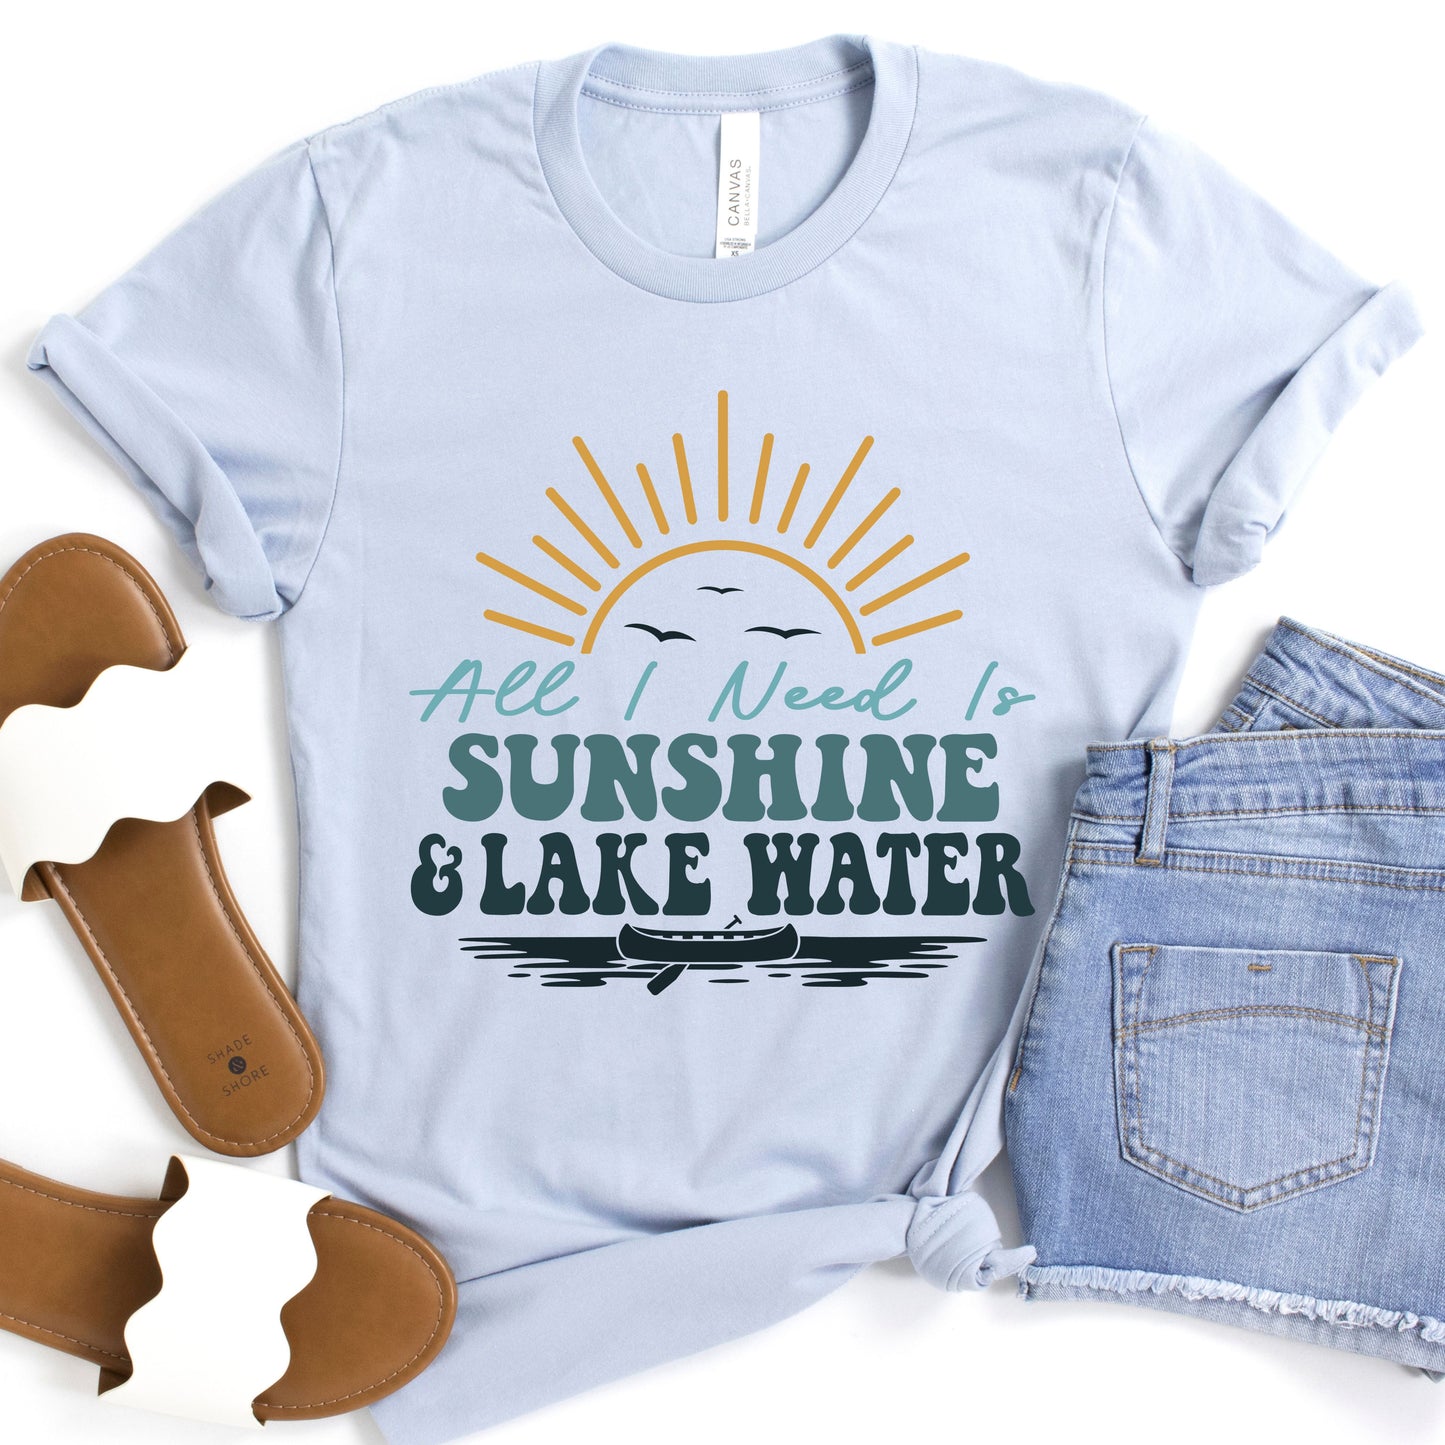 All I Need is Sunshine & Lake Water Jersey Short Sleeve Tee